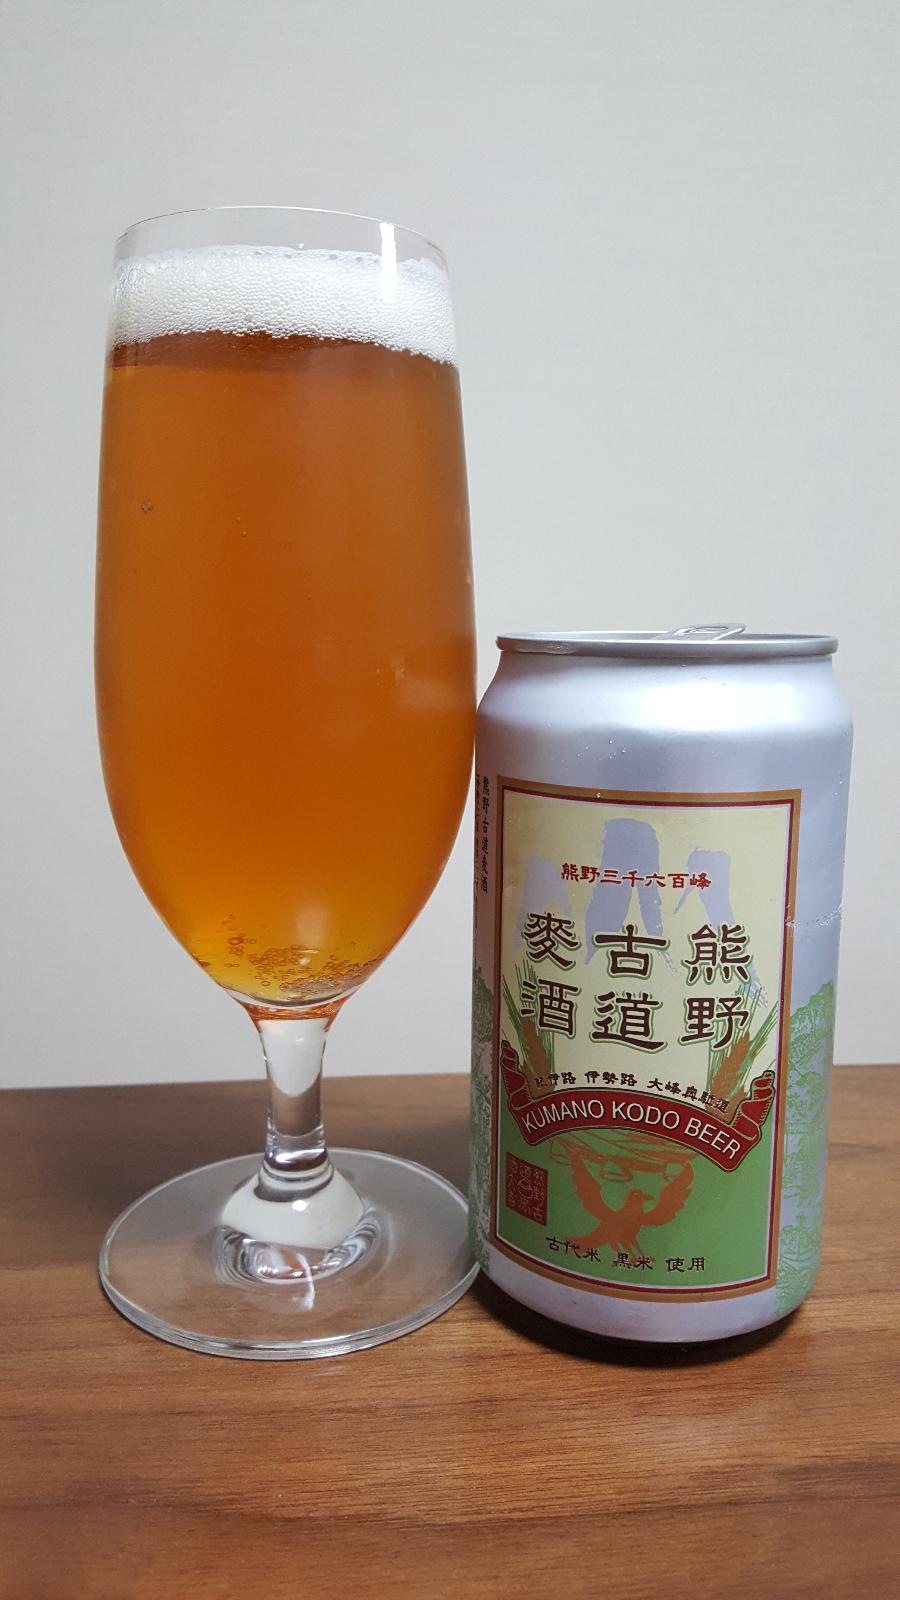 Kumano Kodo Beer Lager